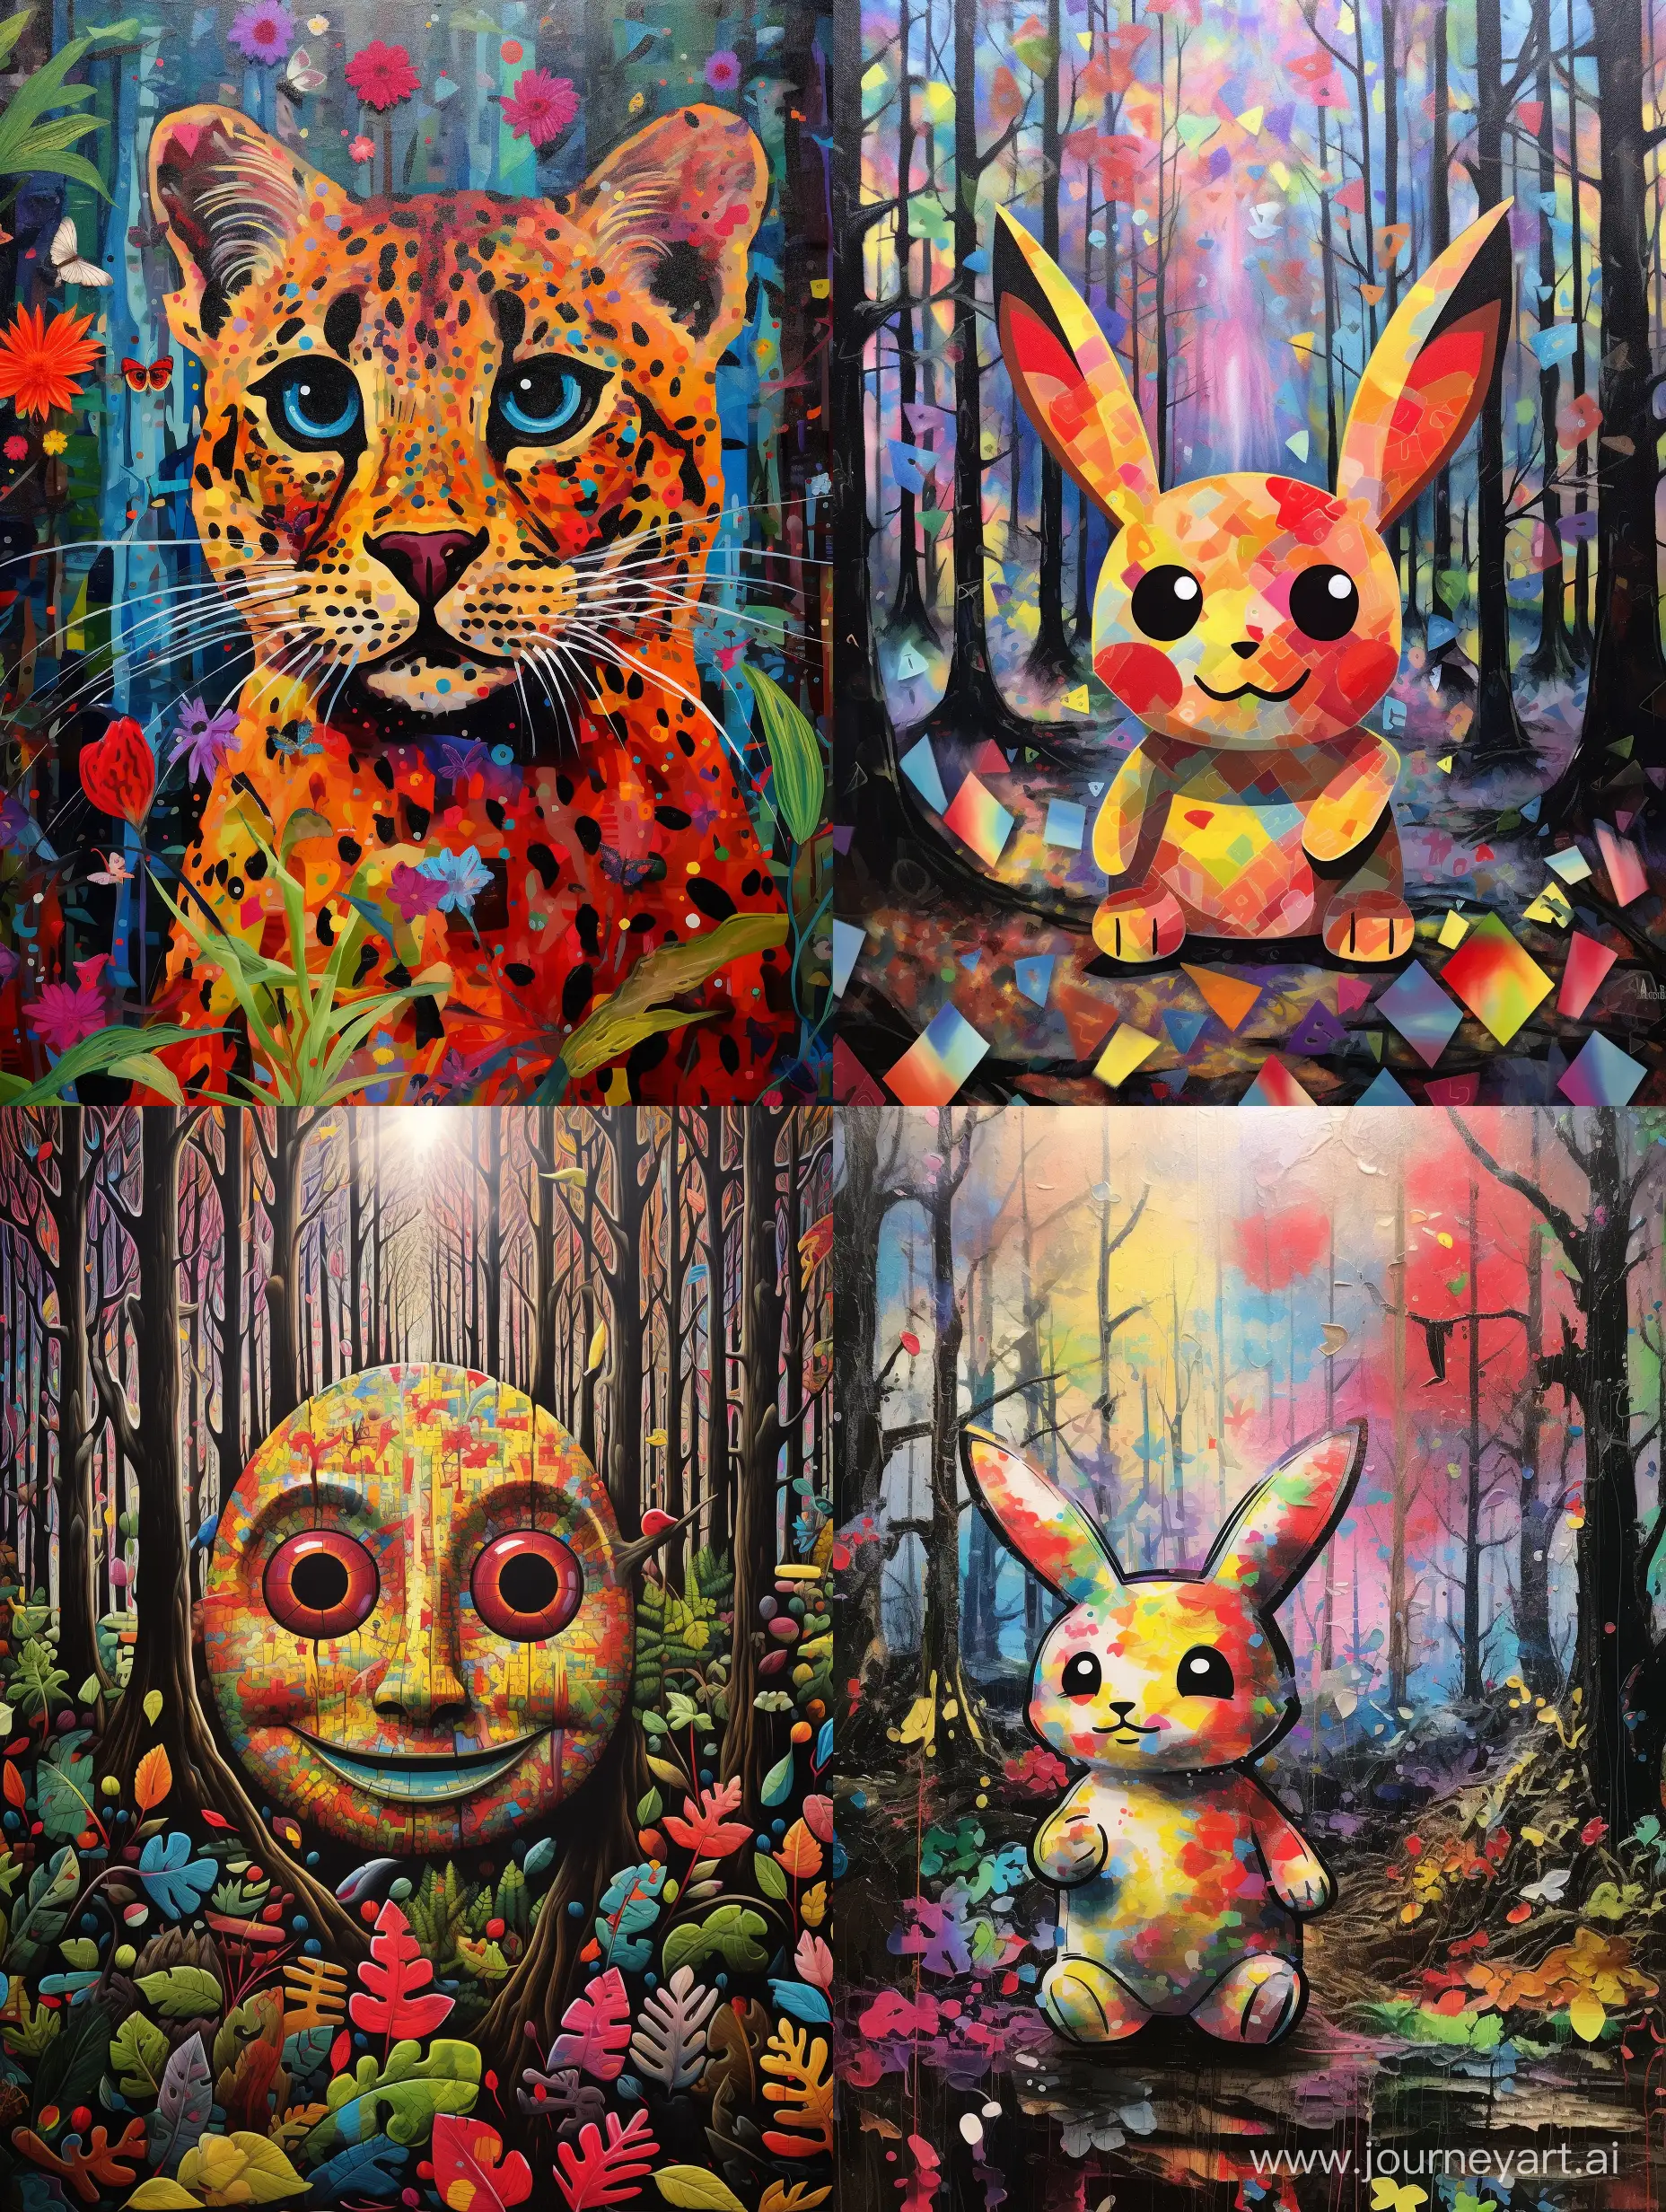 Vibrant-Pikachu-Pop-Art-in-Enchanting-Forest-Setting